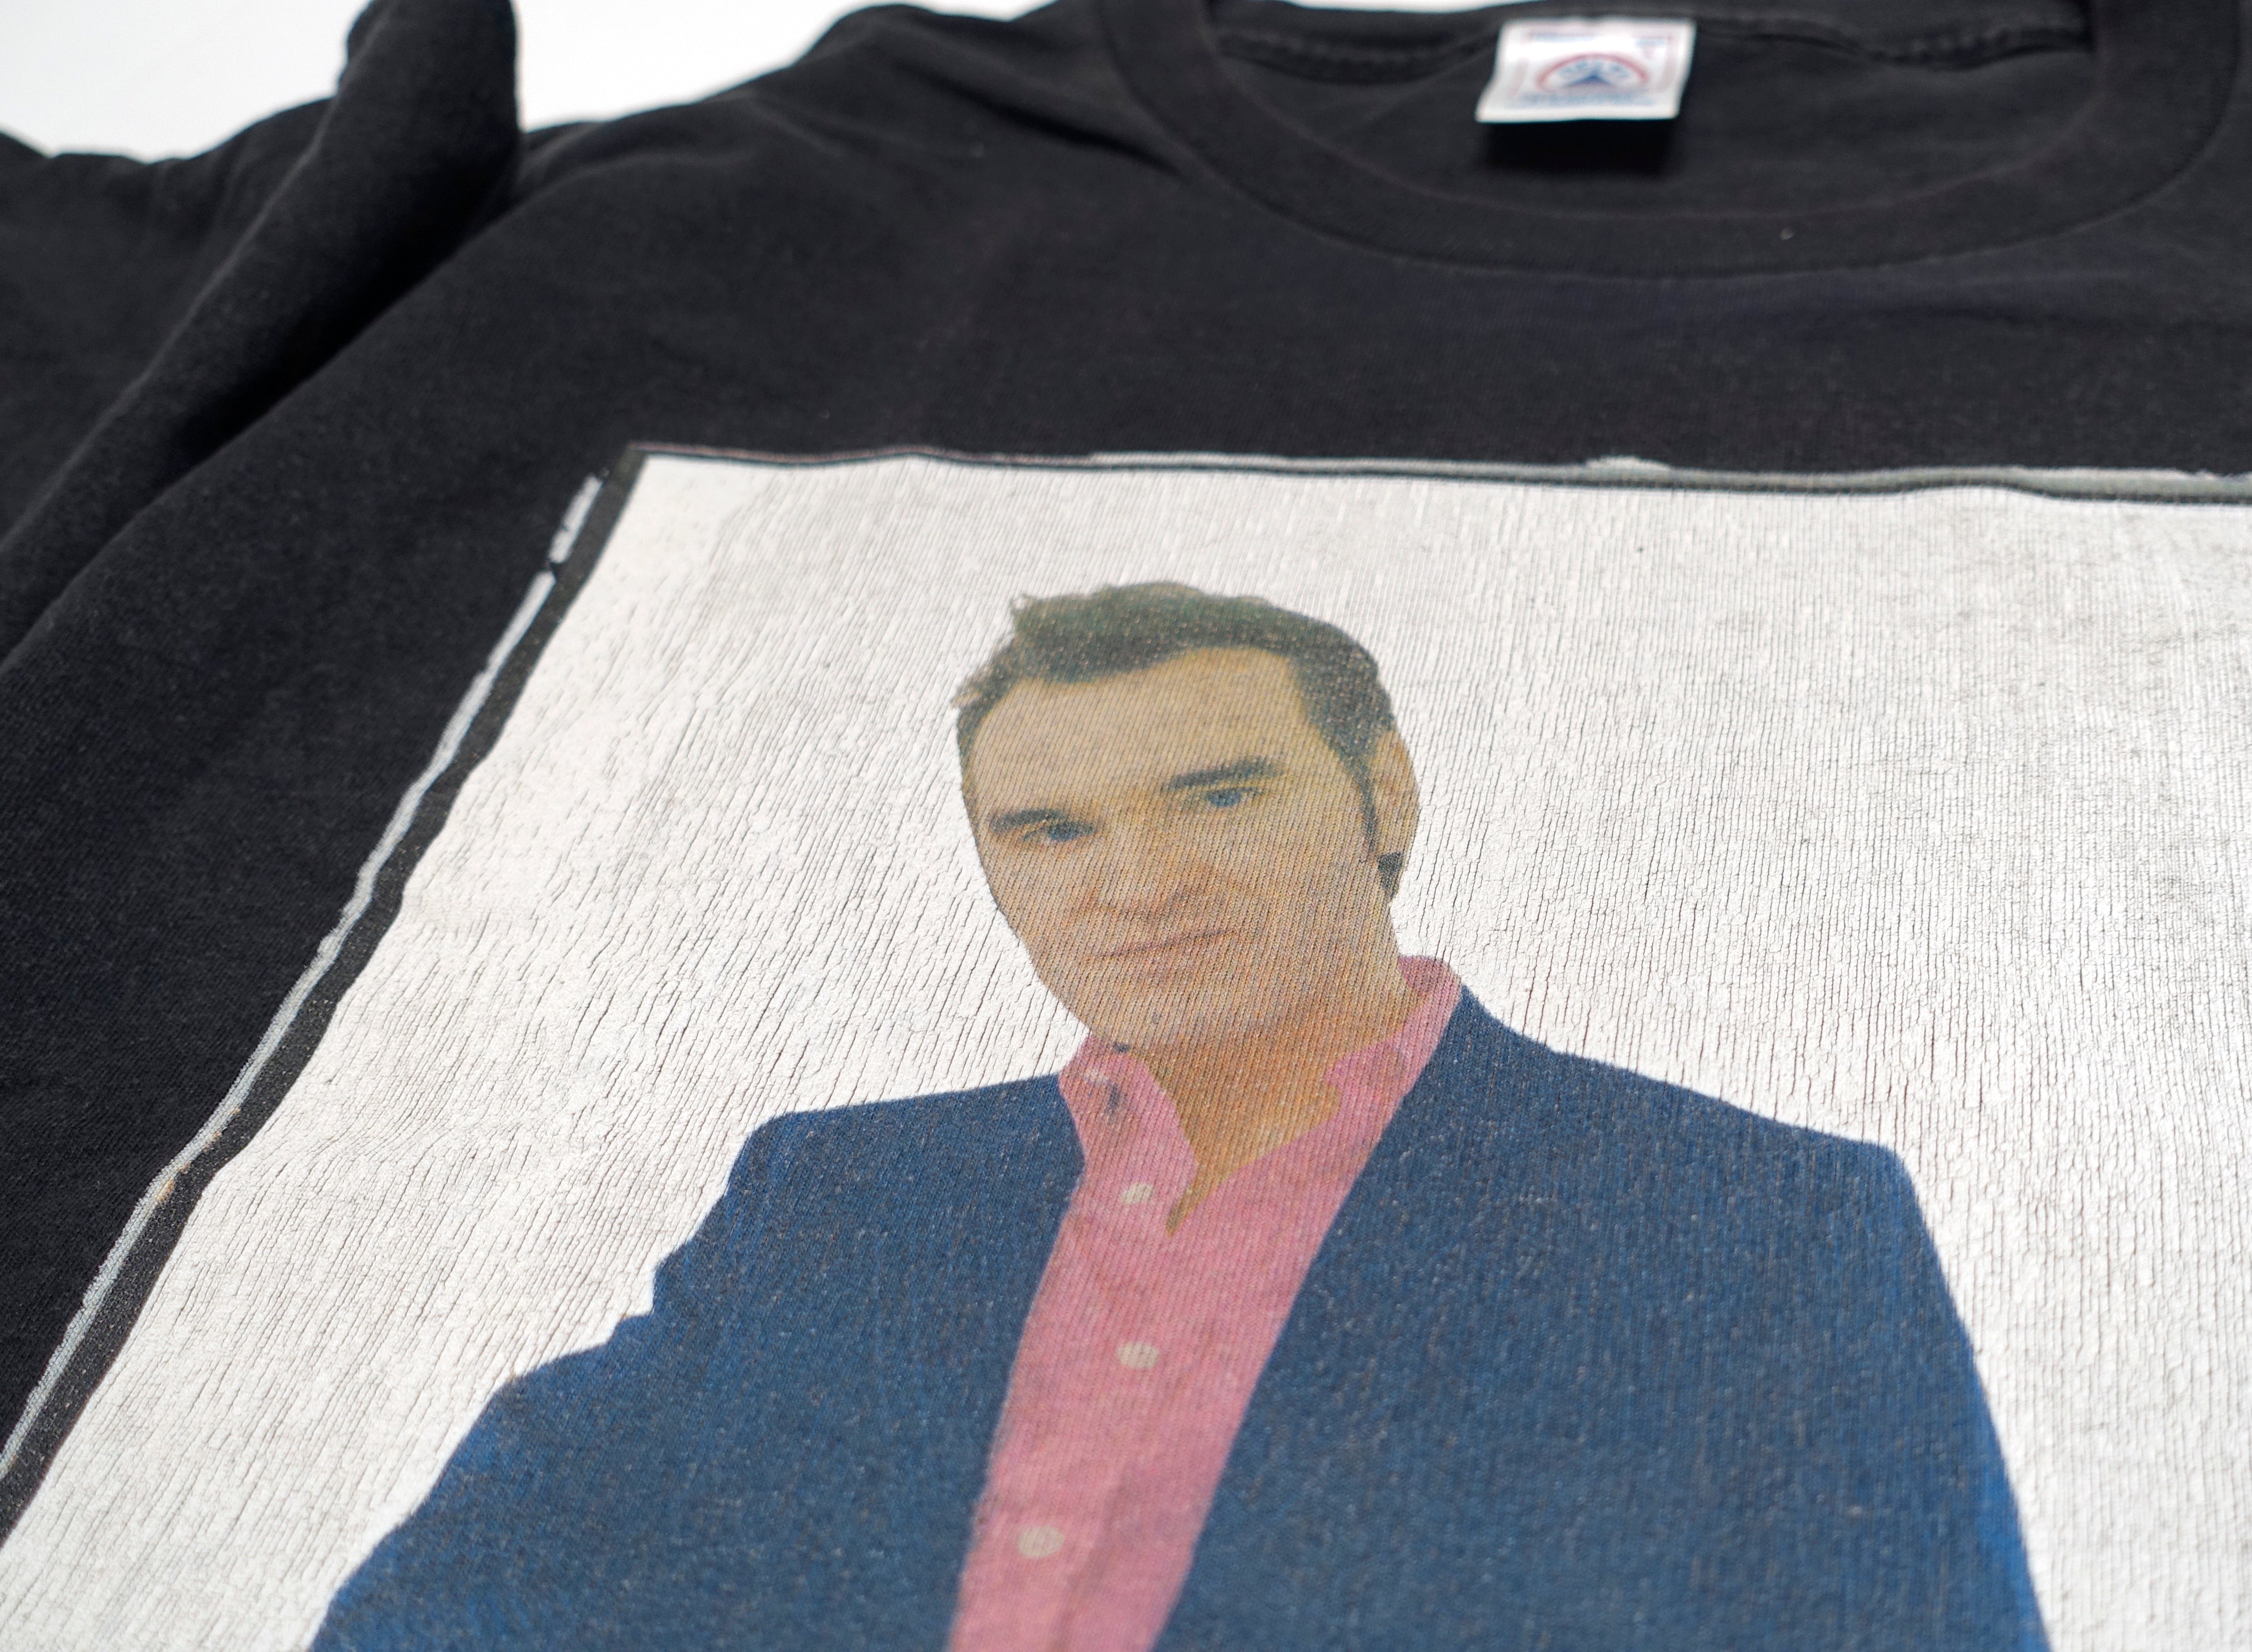 Morrissey - Oye Esteban / Mozzer 2000 Tour Shirt Size Large